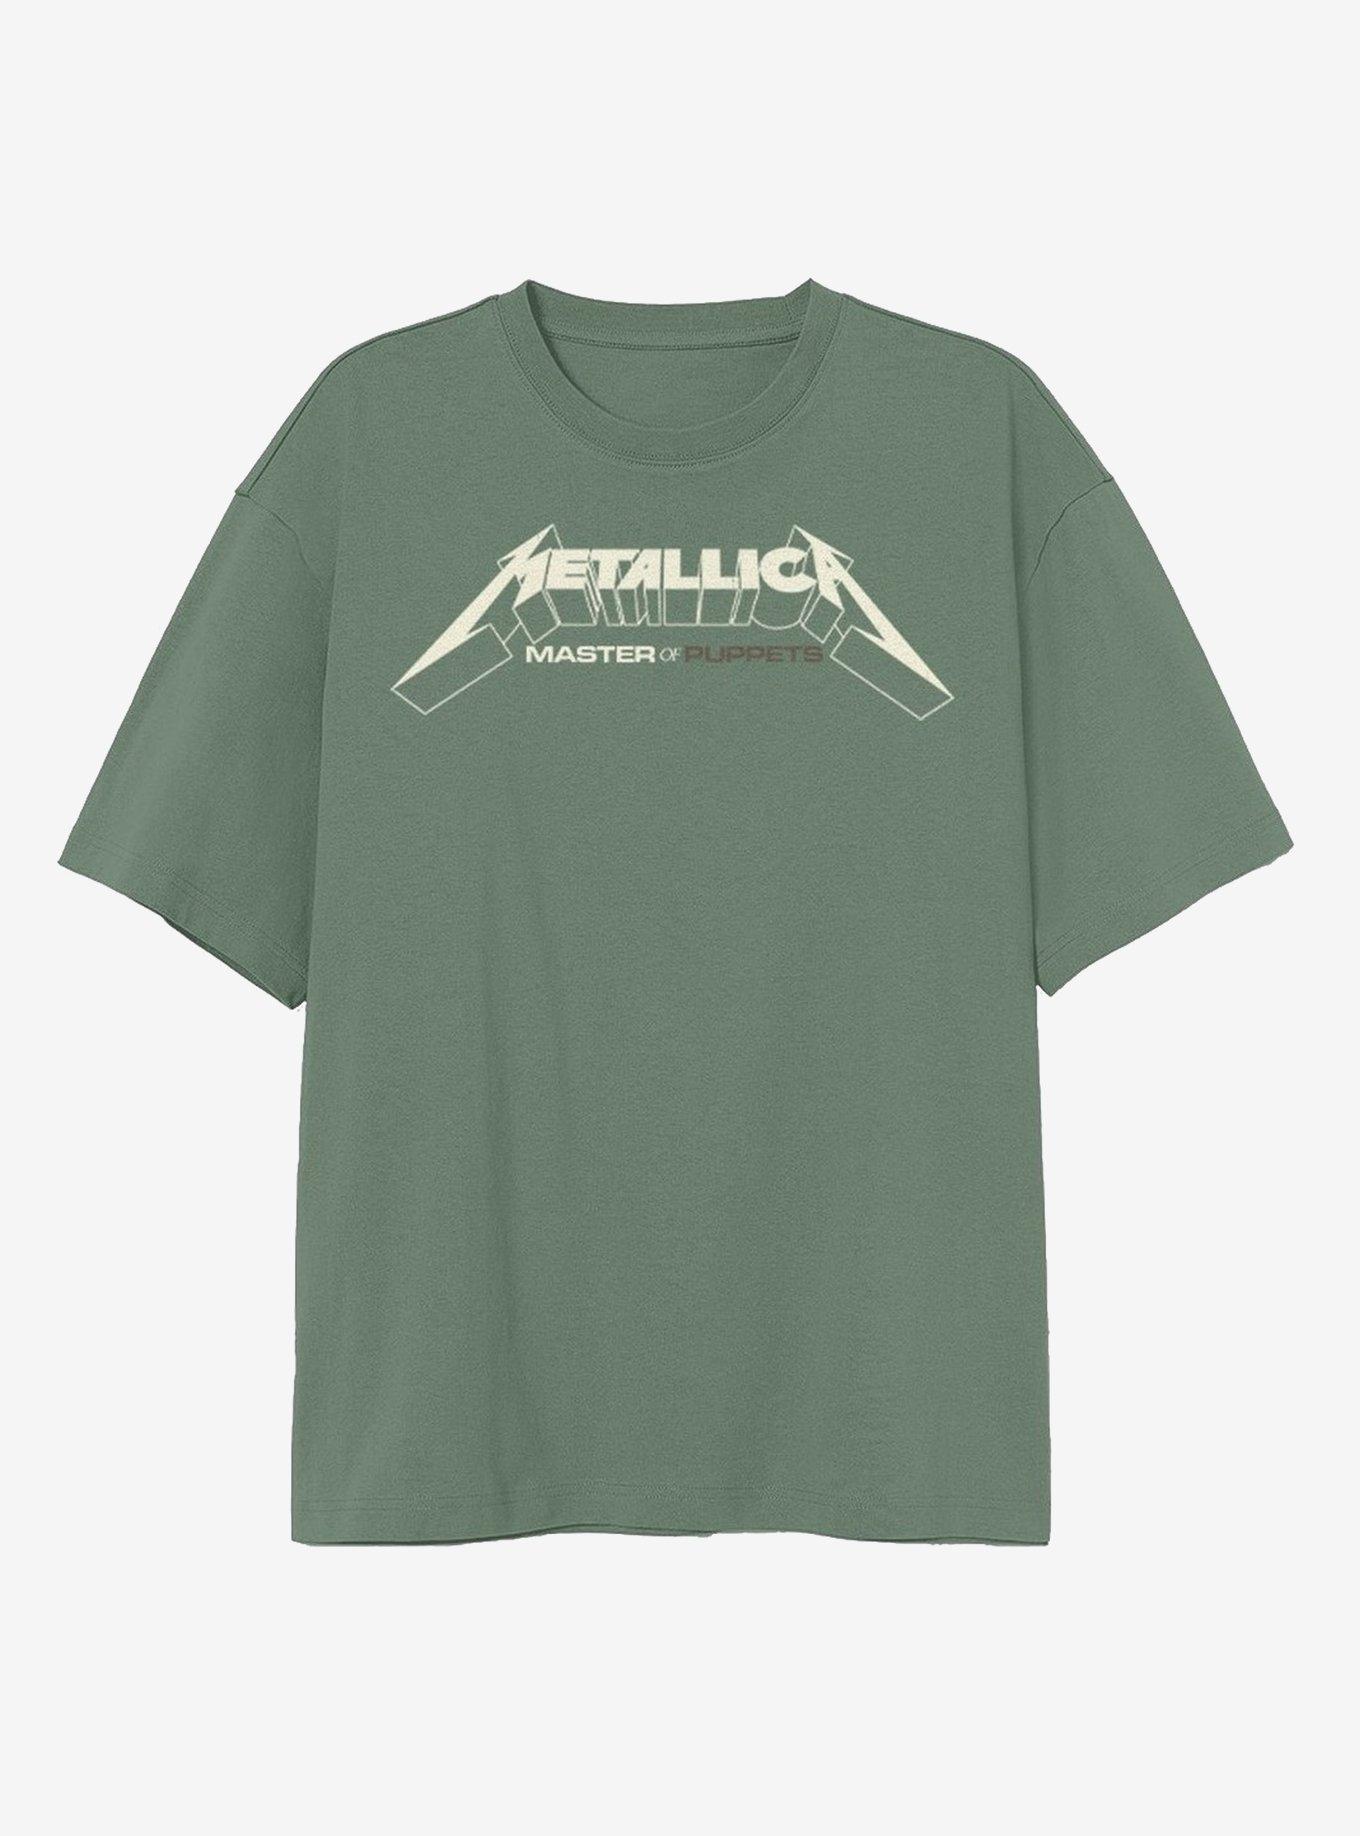 Metallica Master Of Puppets Green T-Shirt, SAGE, hi-res